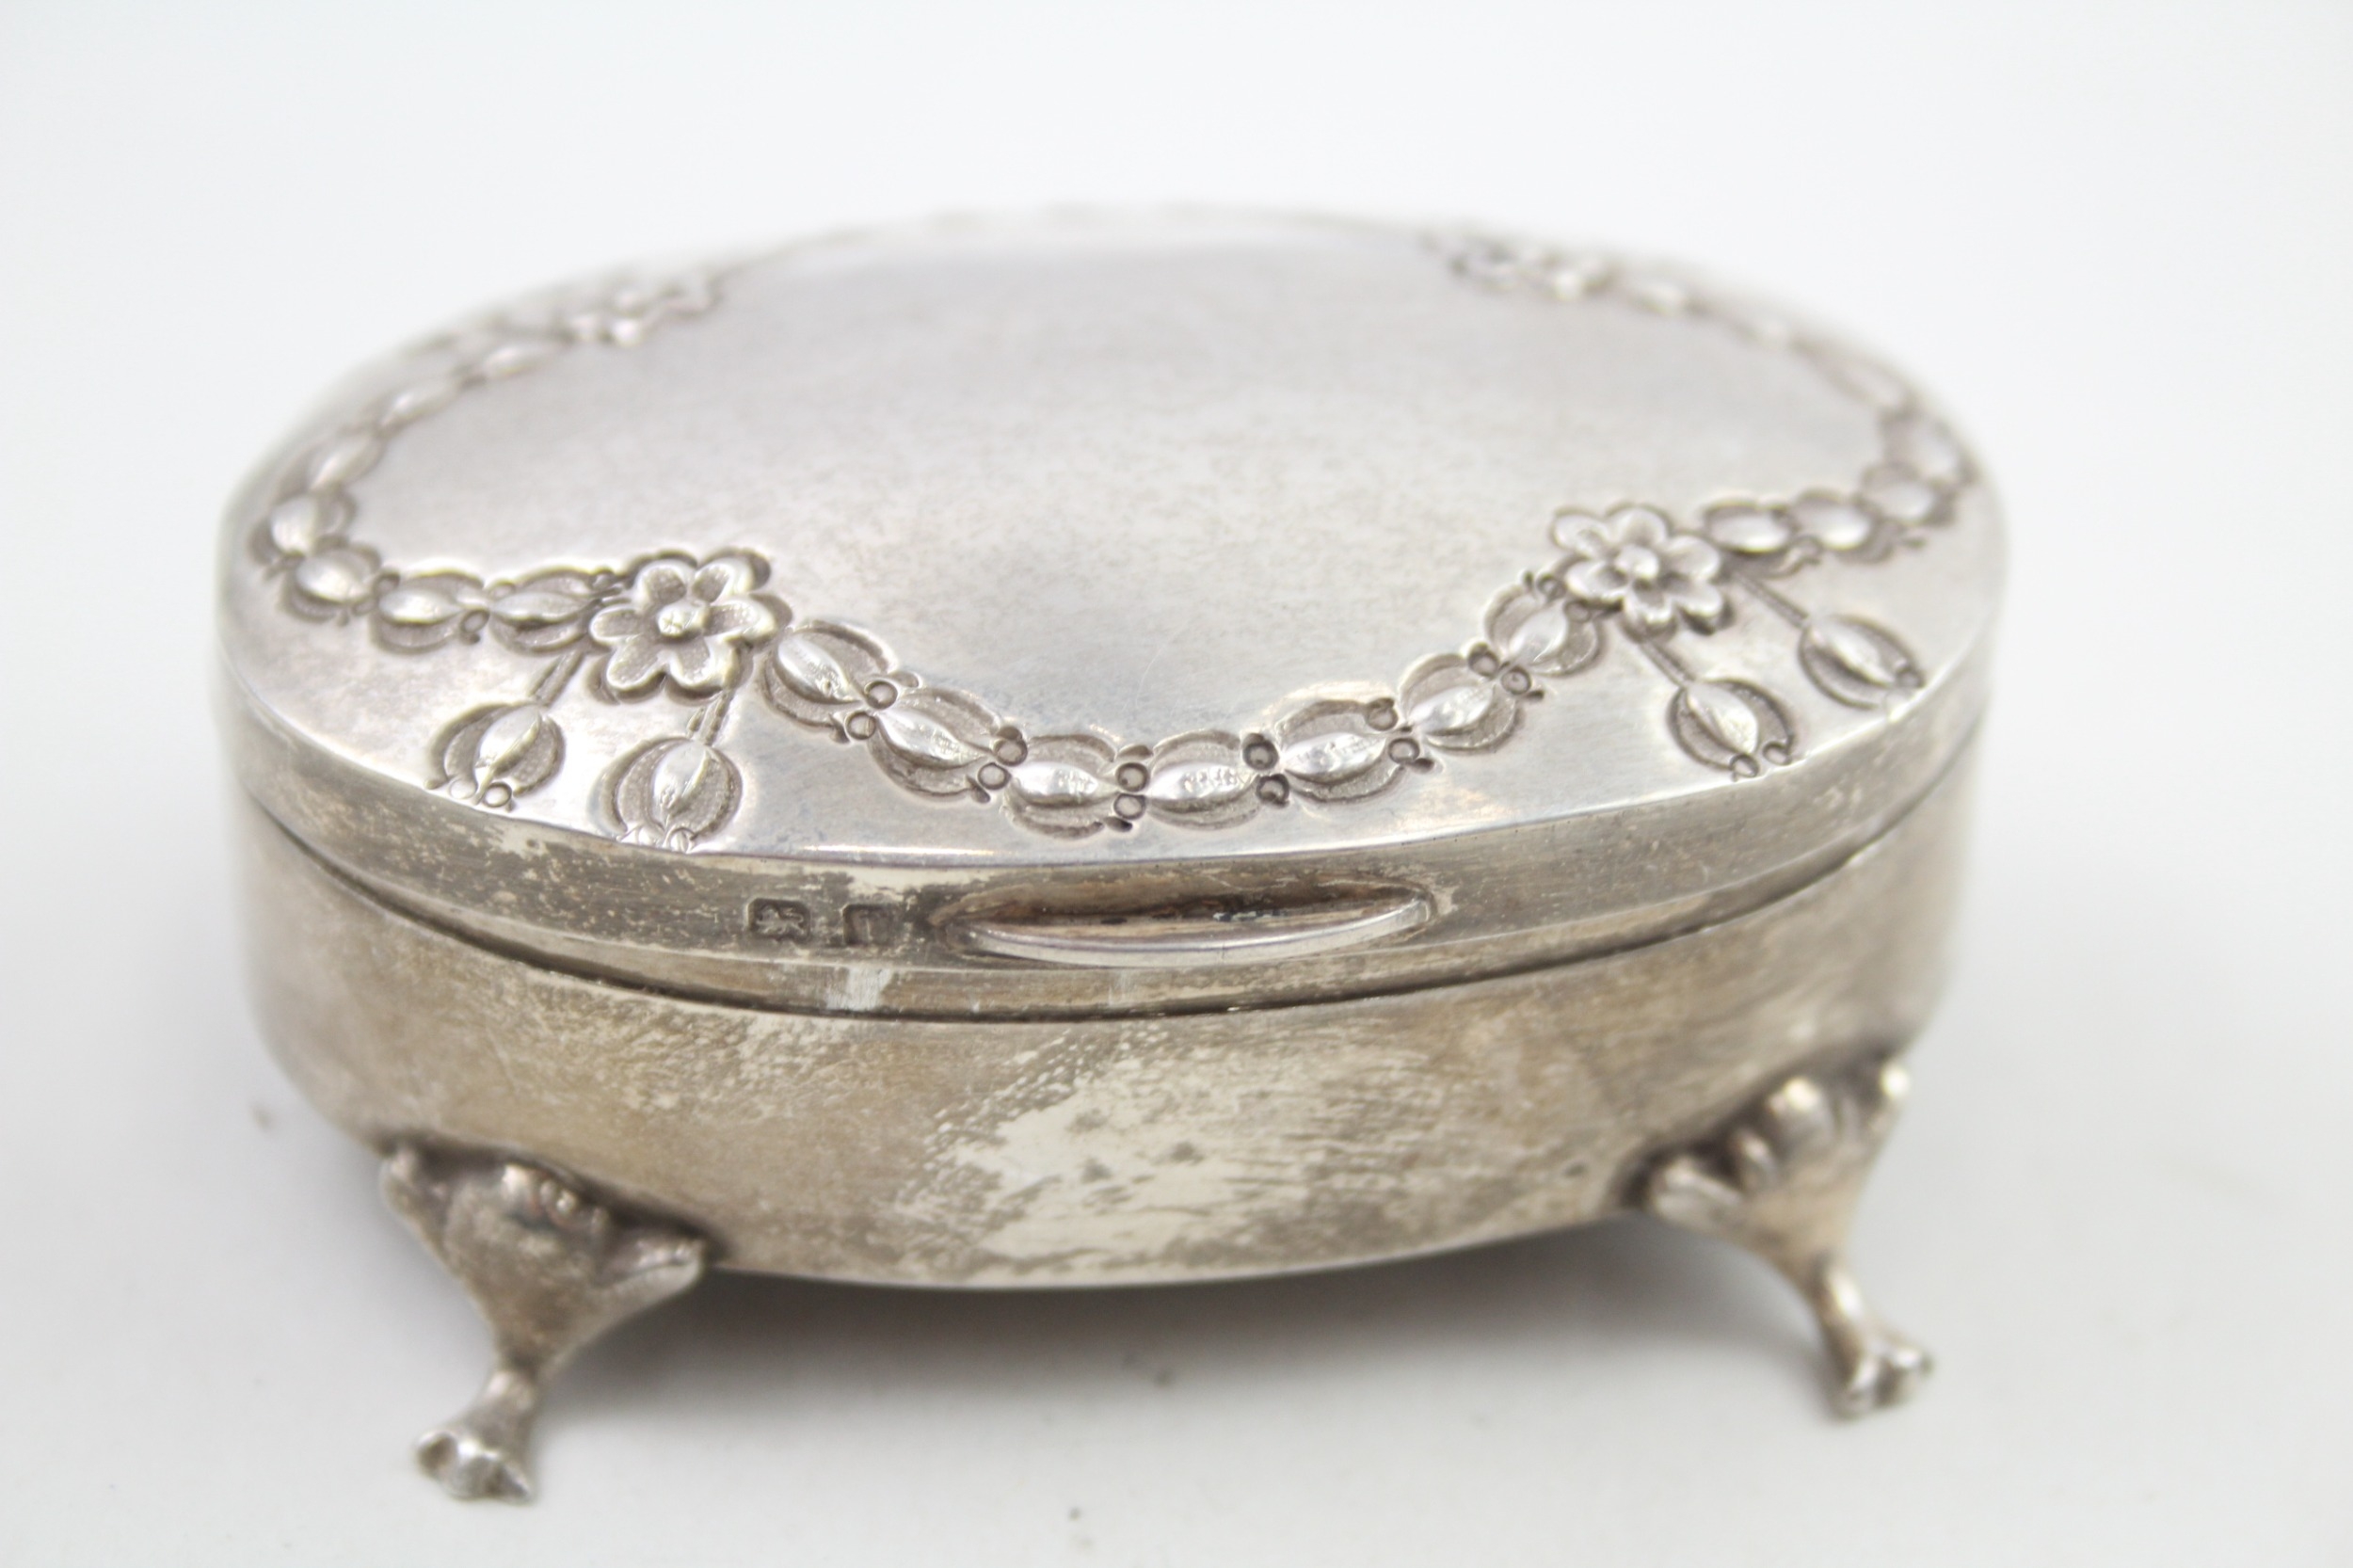 .925 sterling jewellery / trinket box - Image 4 of 6